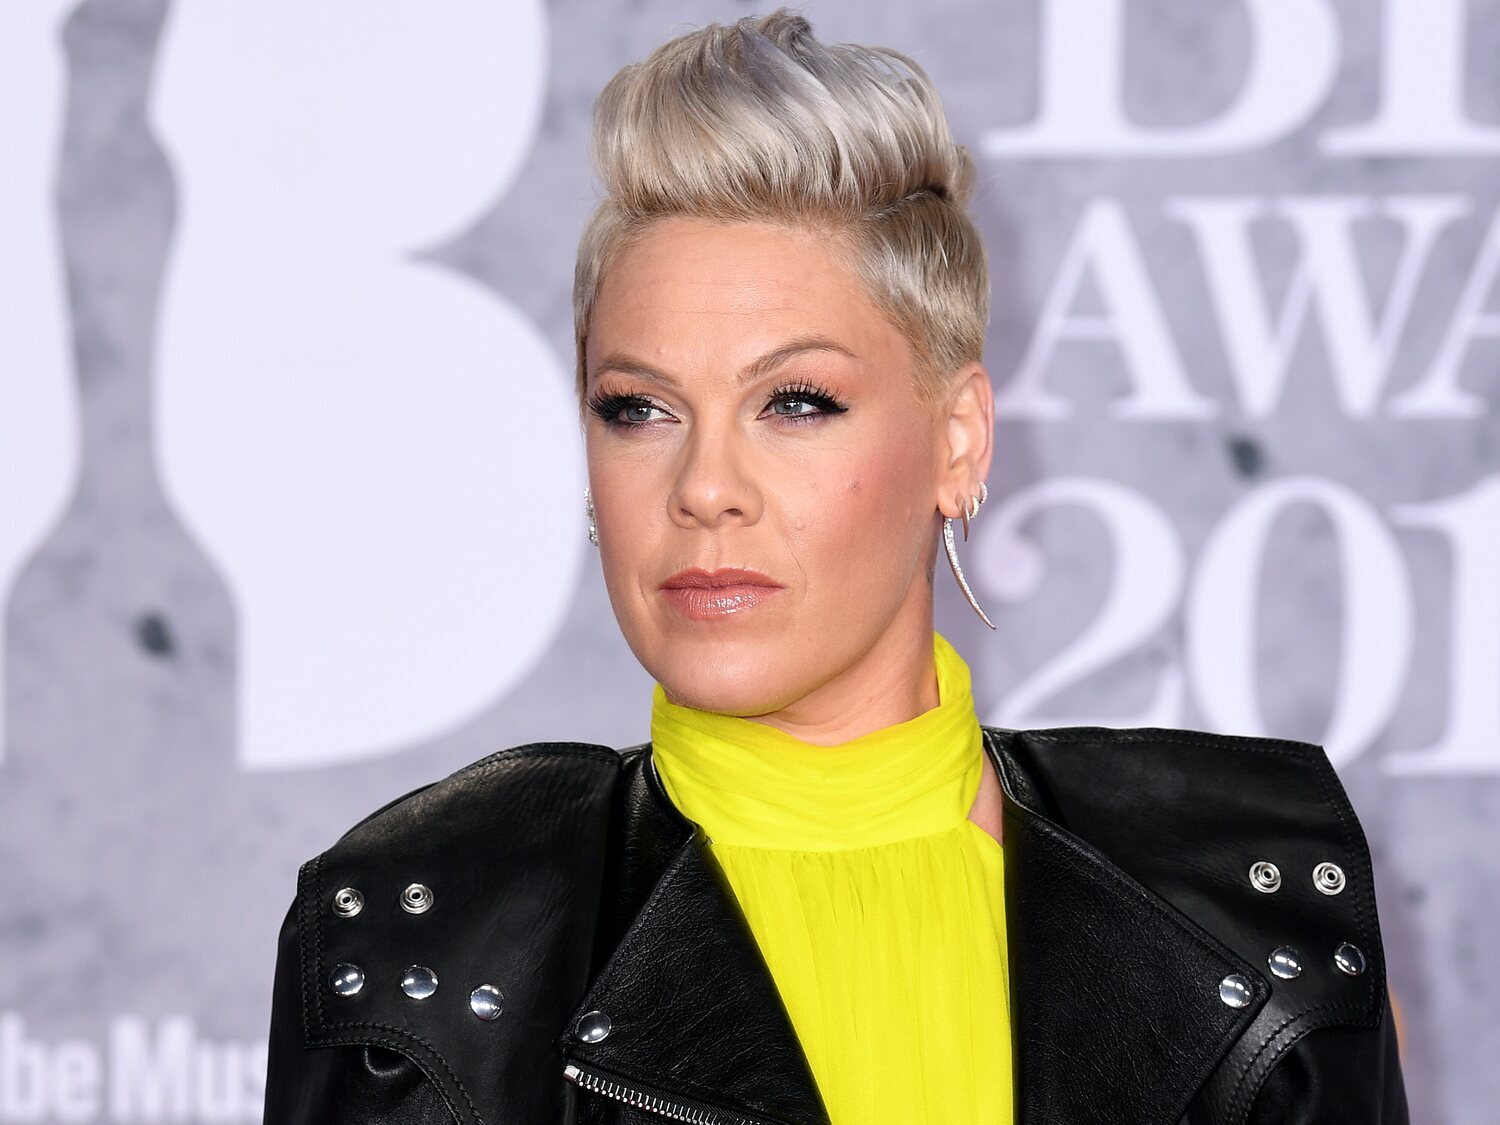 La cantante Pink confiesa que estuvo a punto de morir por sobredosis: "Descarrilé"